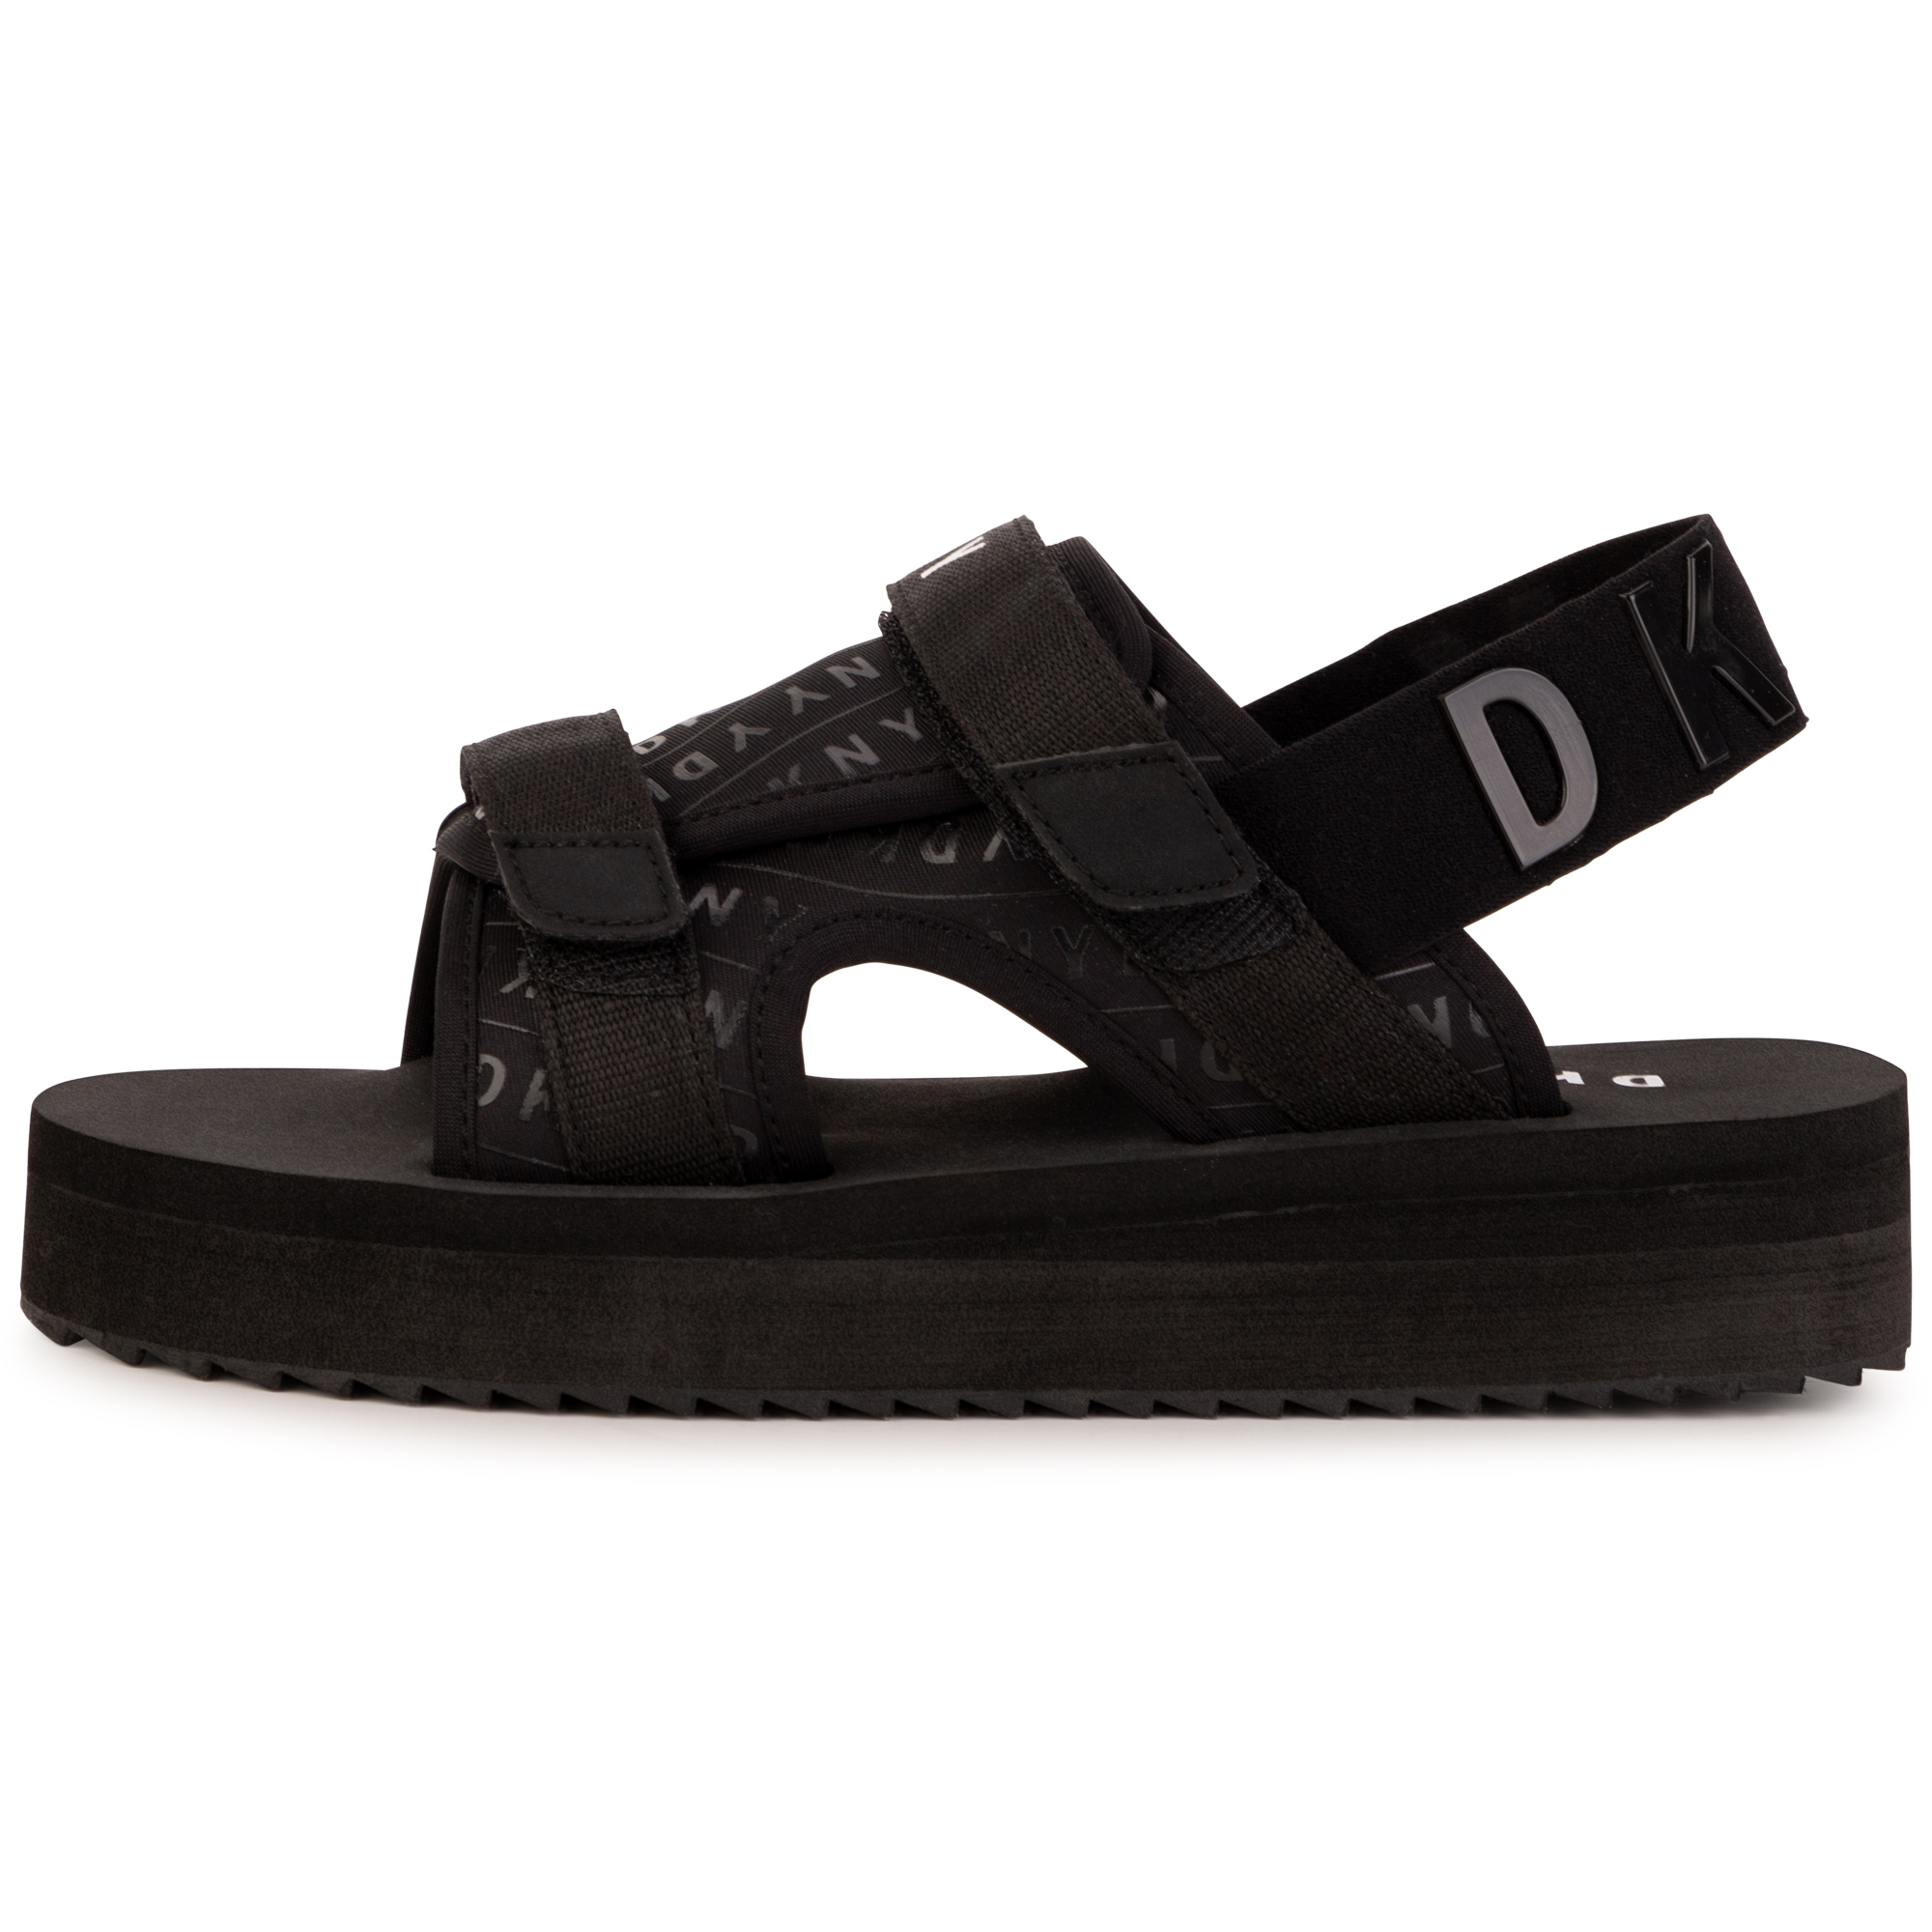 Satin sandals DKNY for GIRL